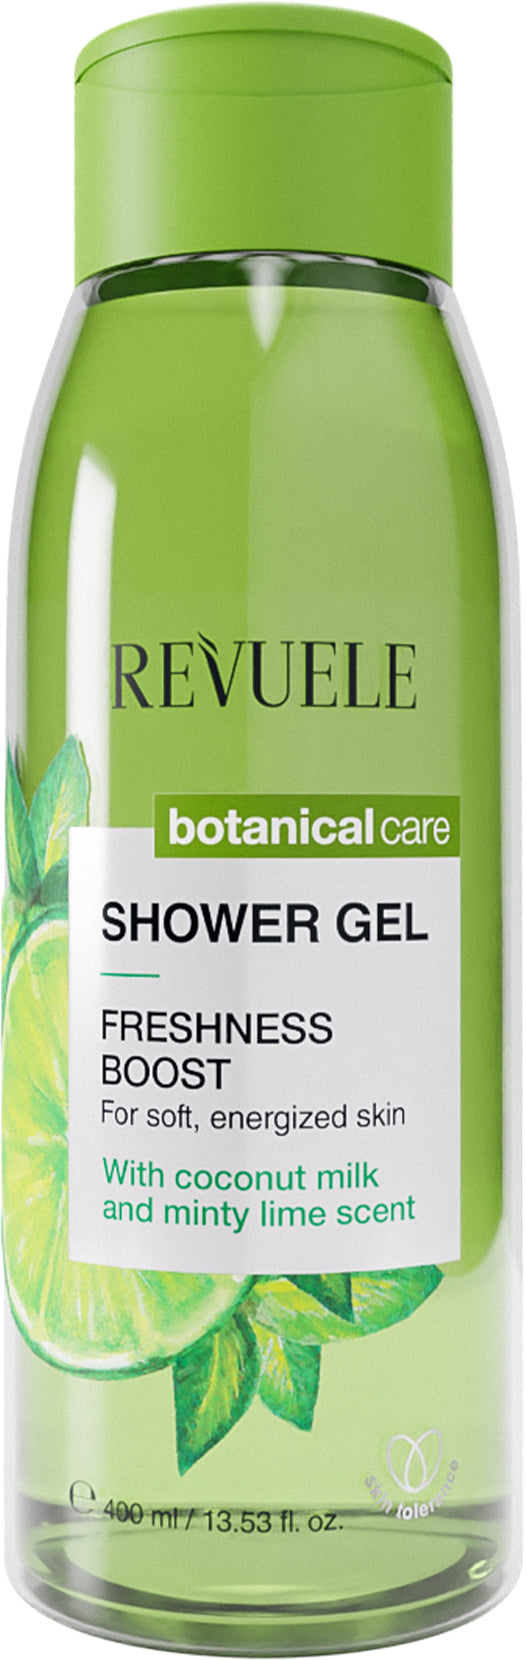 Revuele Shower Gel Freshness Boost 400Ml